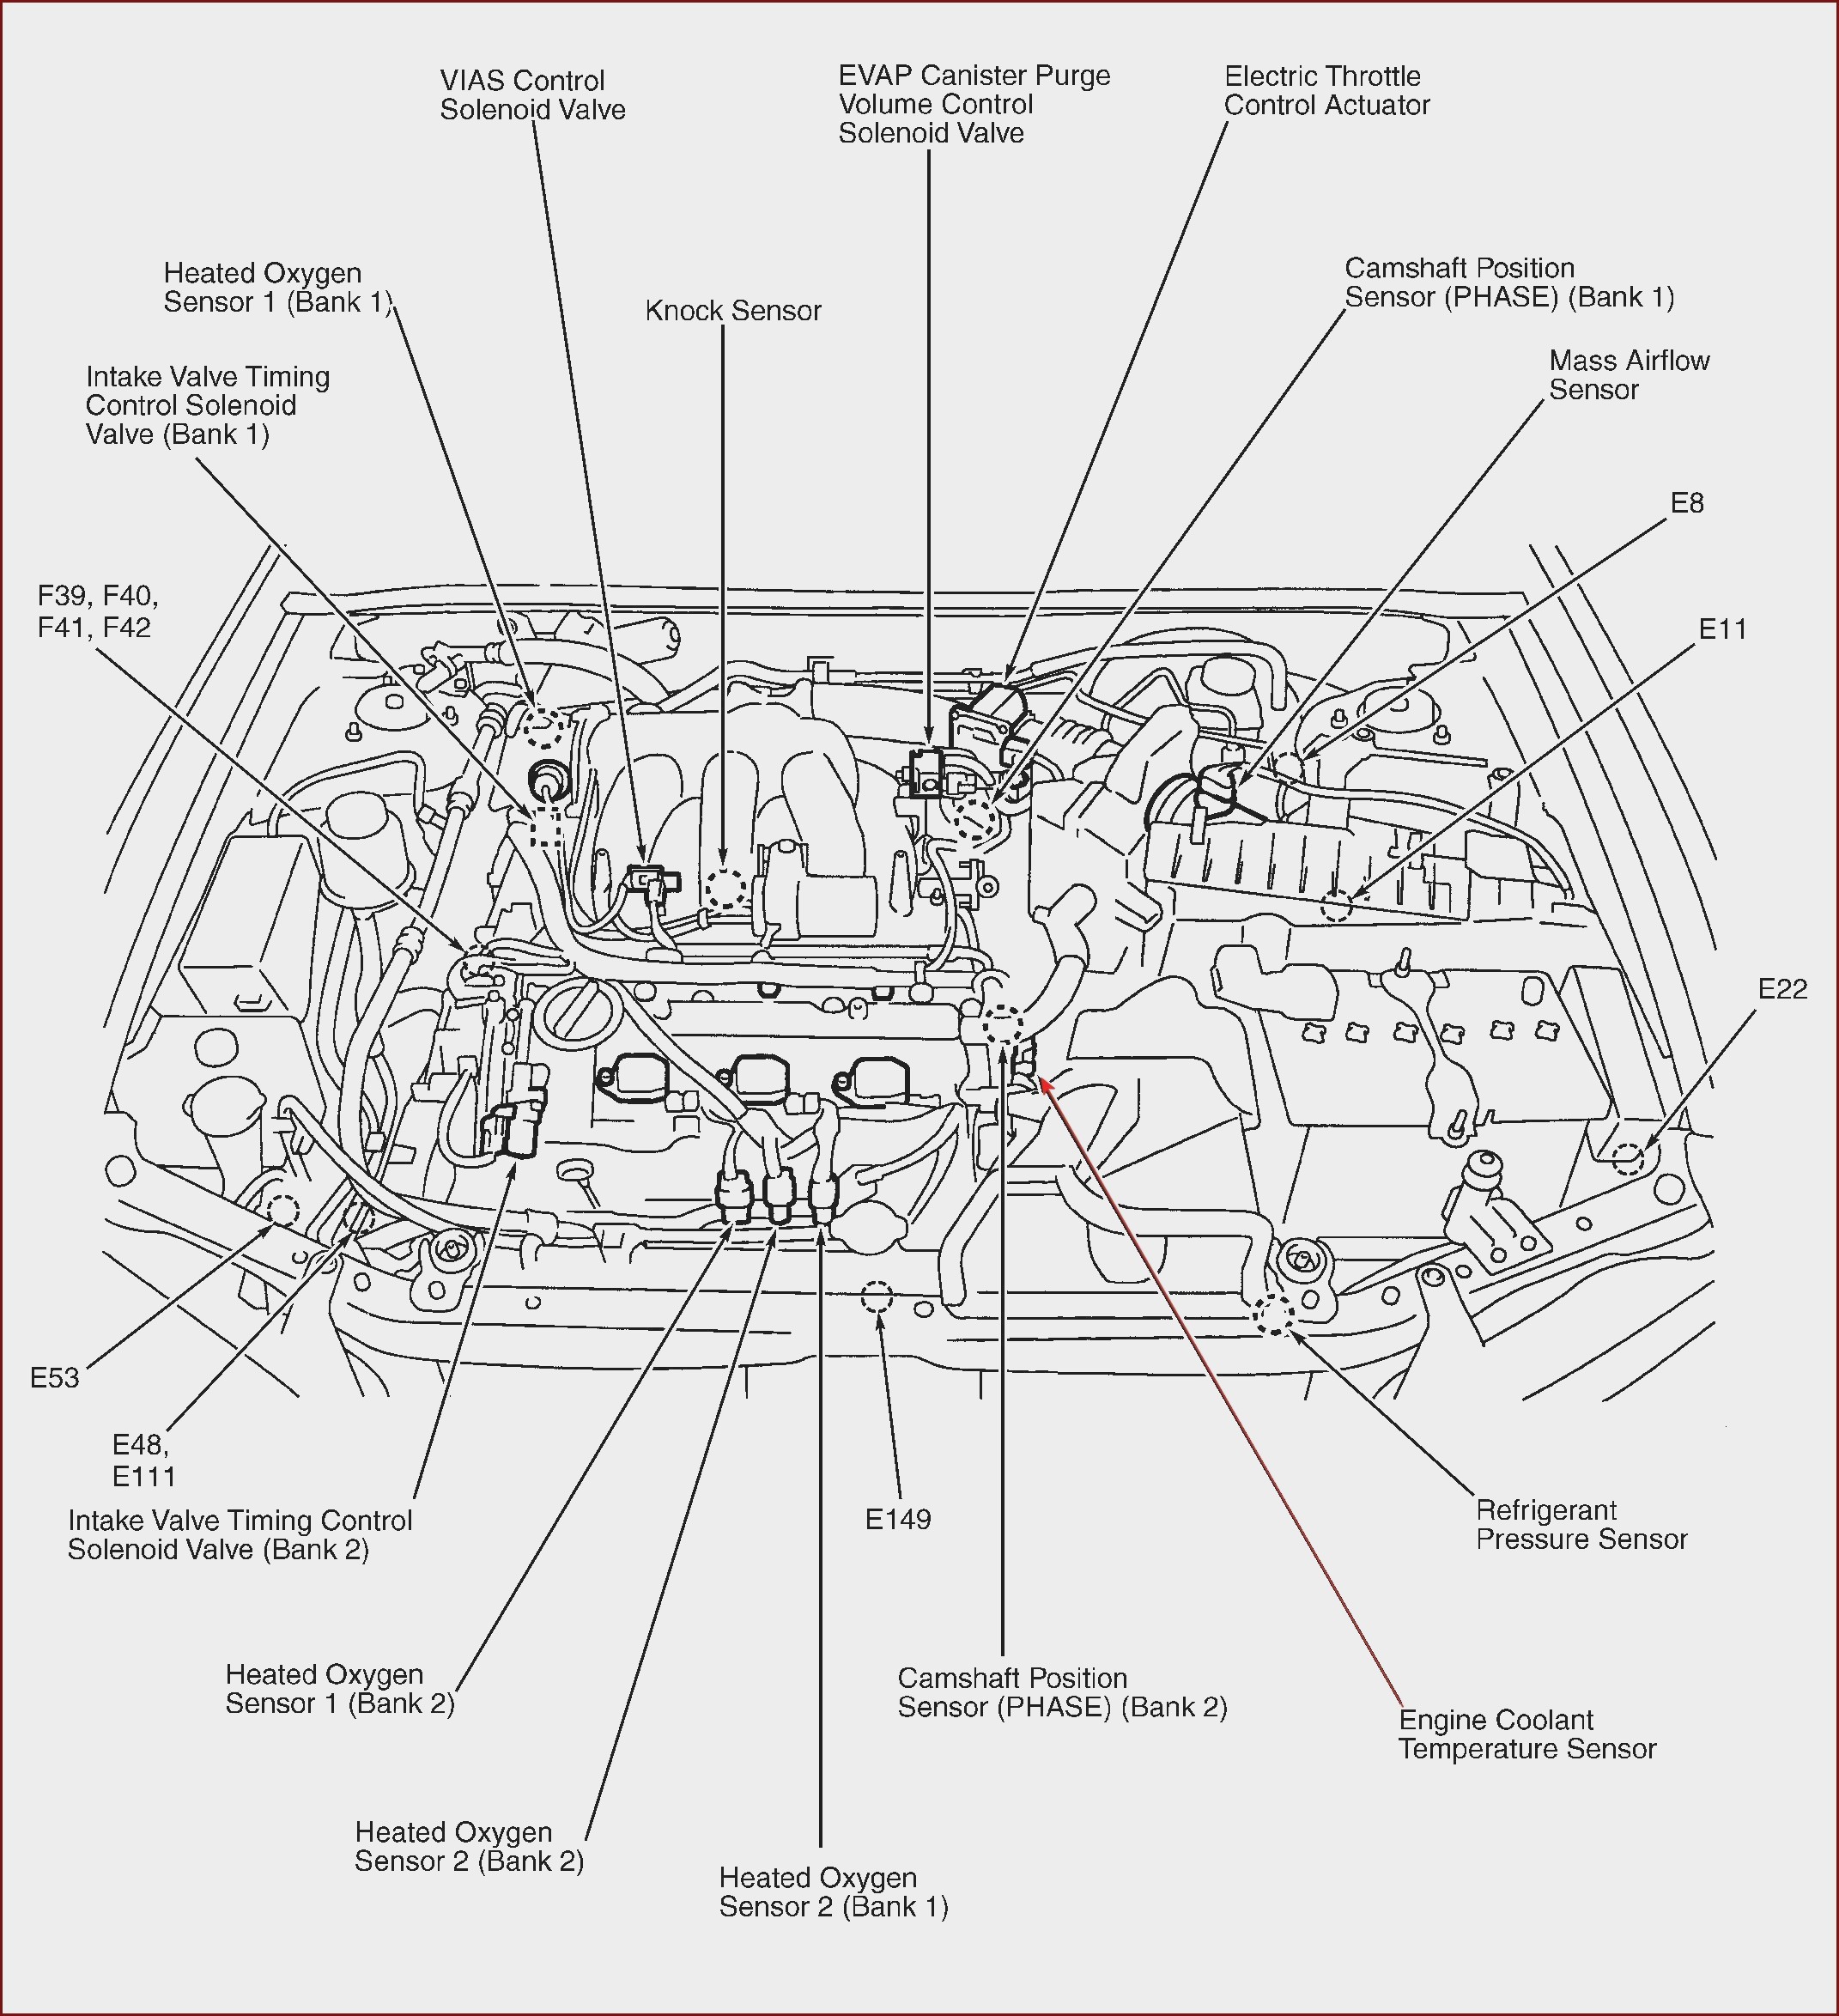 1997 Nissan Altima Engine Diagram 1995 Nissan Pathfinder Starter Wiring Diagram at Manuals Library Of 1997 Nissan Altima Engine Diagram